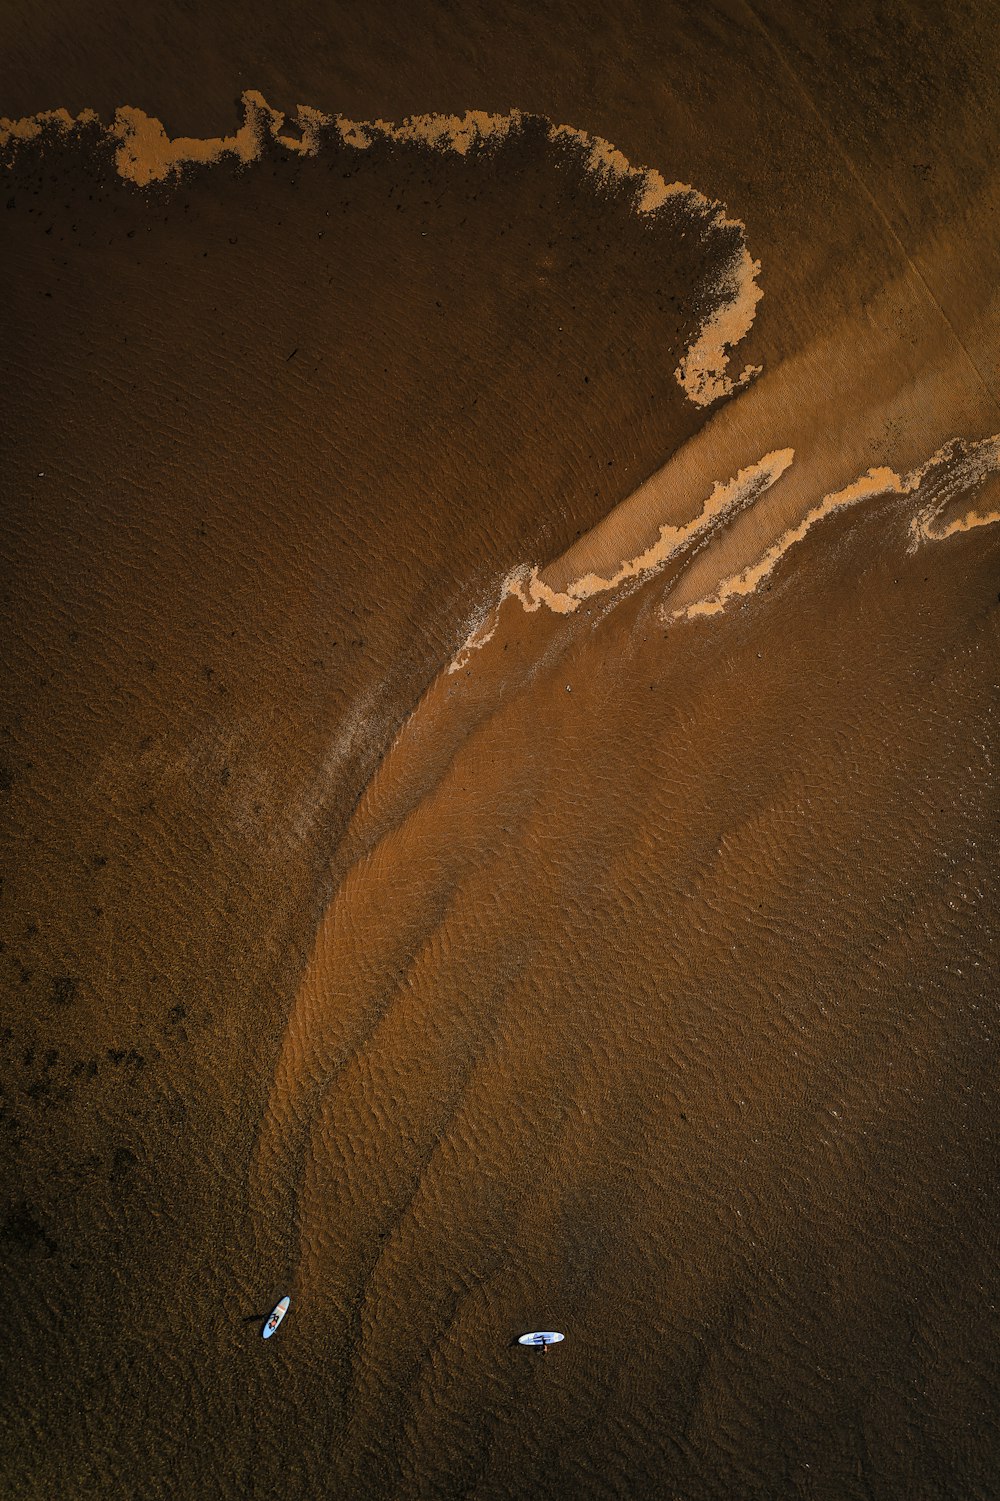 a close-up of a beach